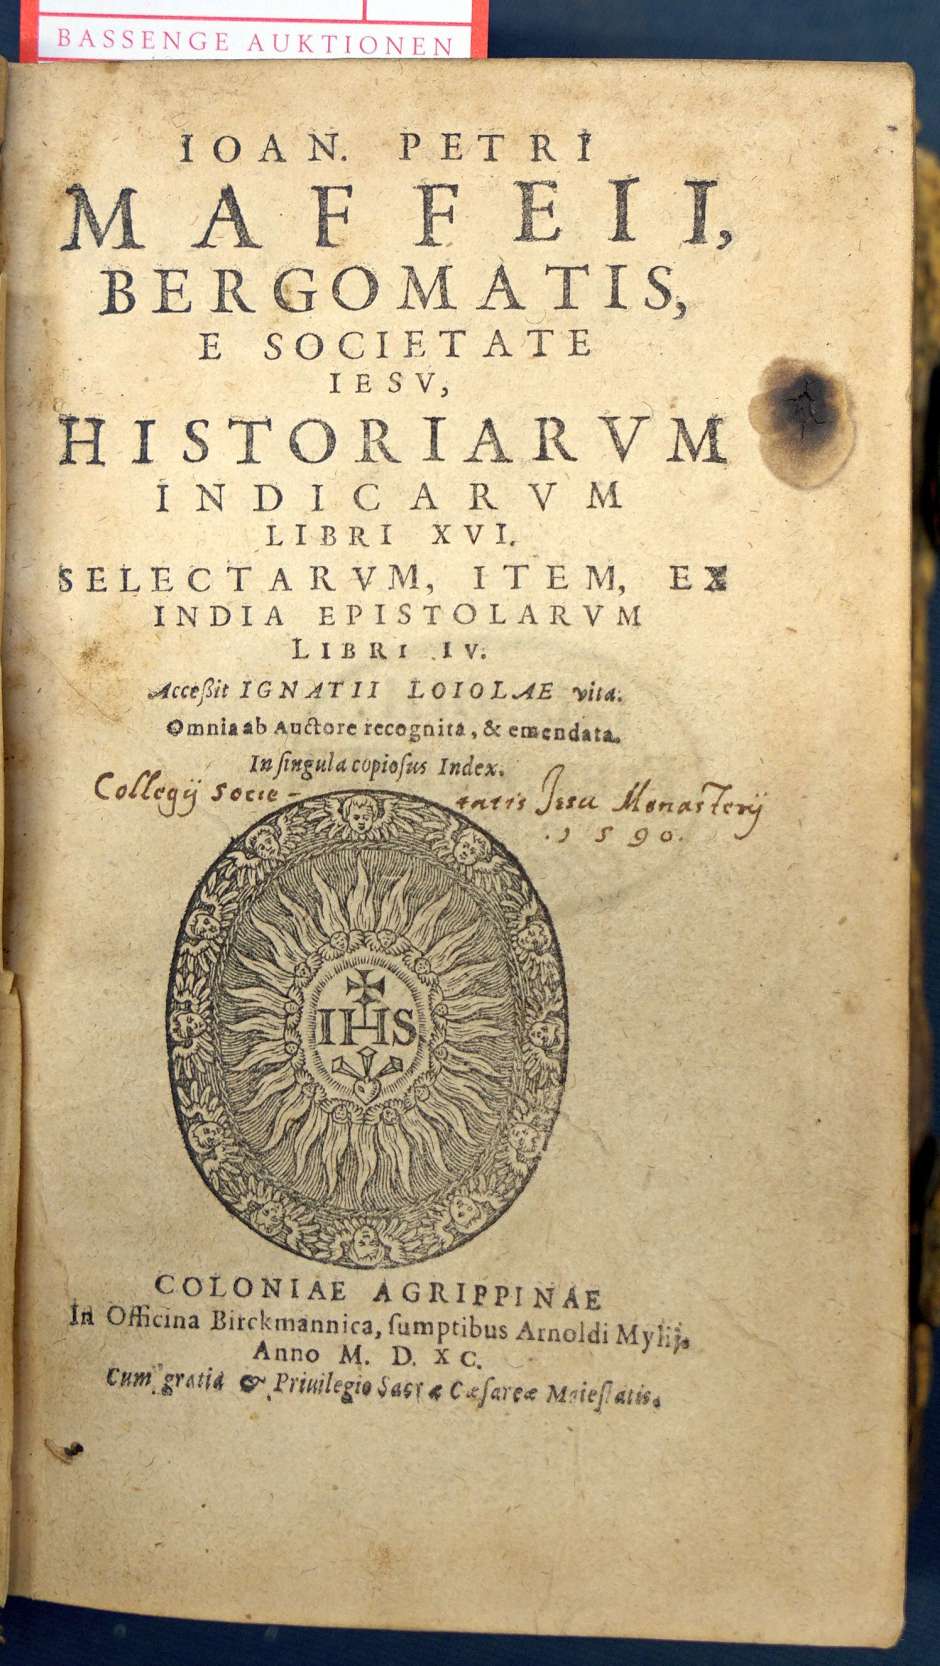 Lot 1146, Auction  115, Maffei, Johann Peter, Historiarum indicarum libri XVI